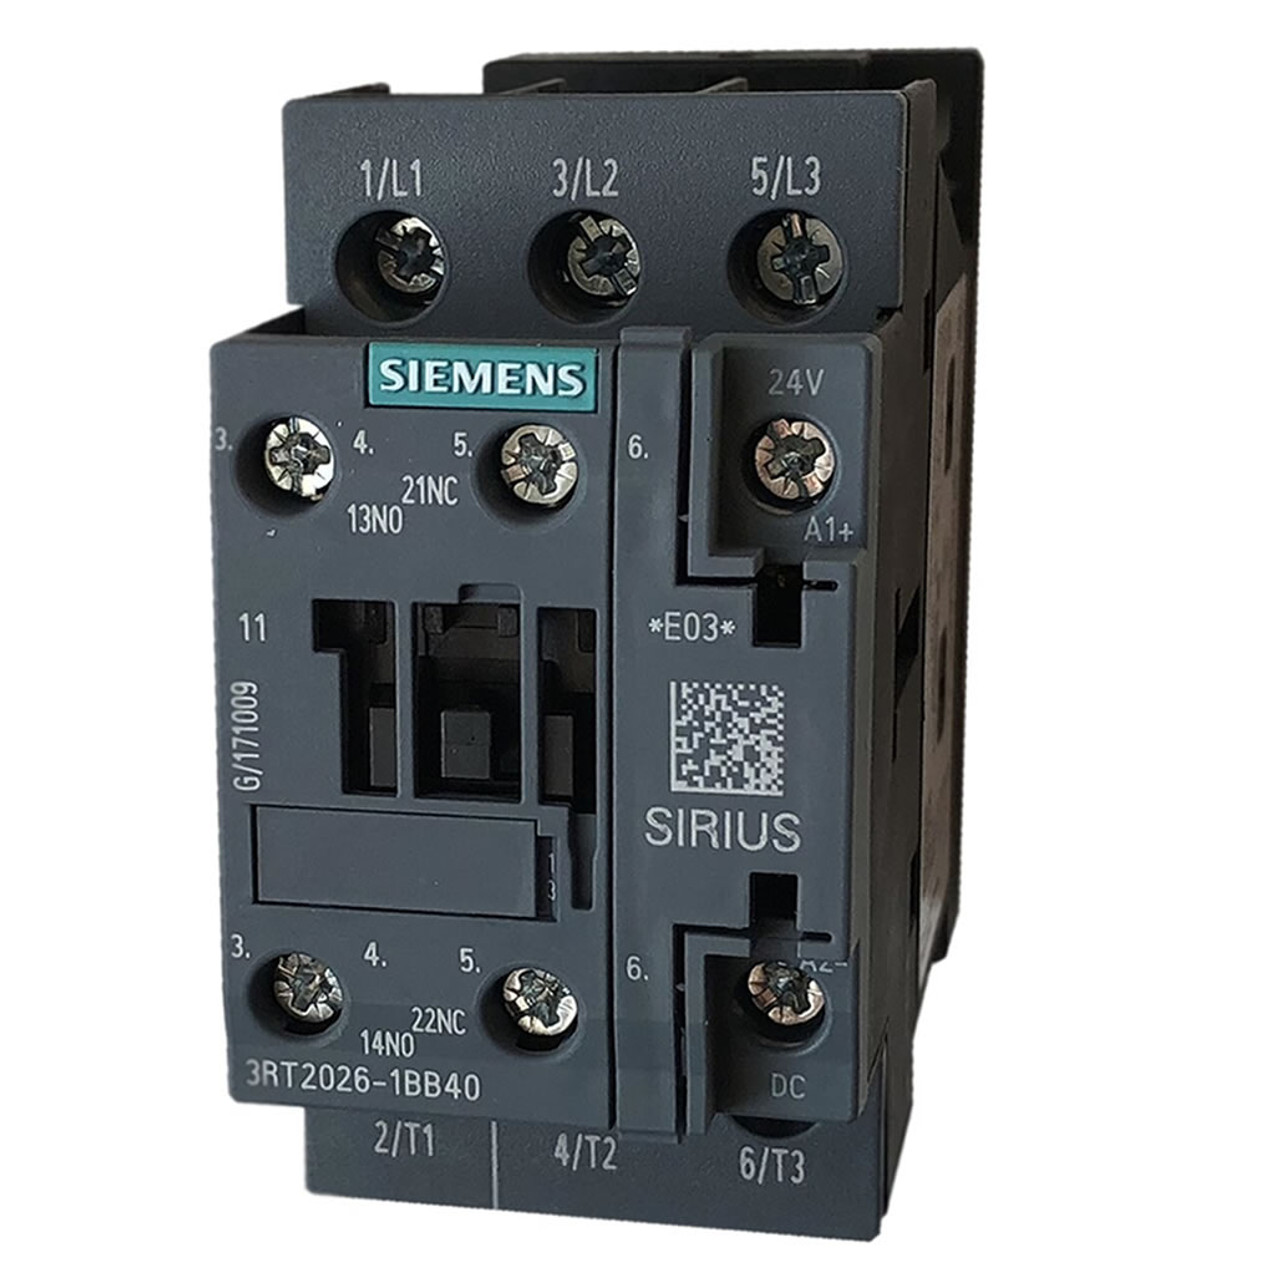 Siemens 3RT2026-1BW40 contactor